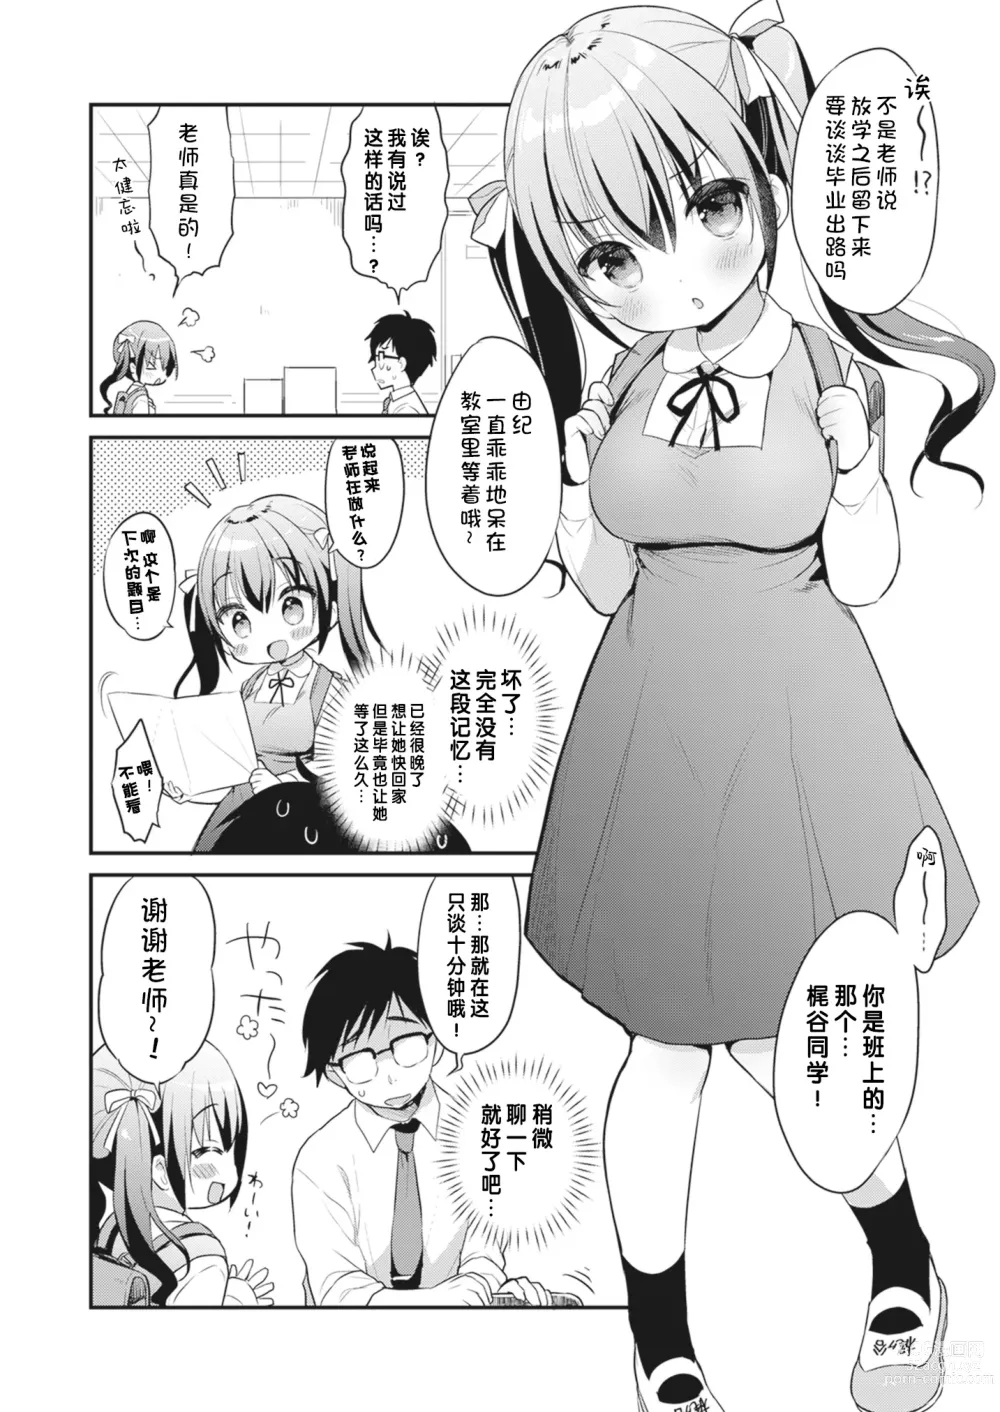 Page 8 of doujinshi 我们的CQC ~ 小小子宫梦想满溢